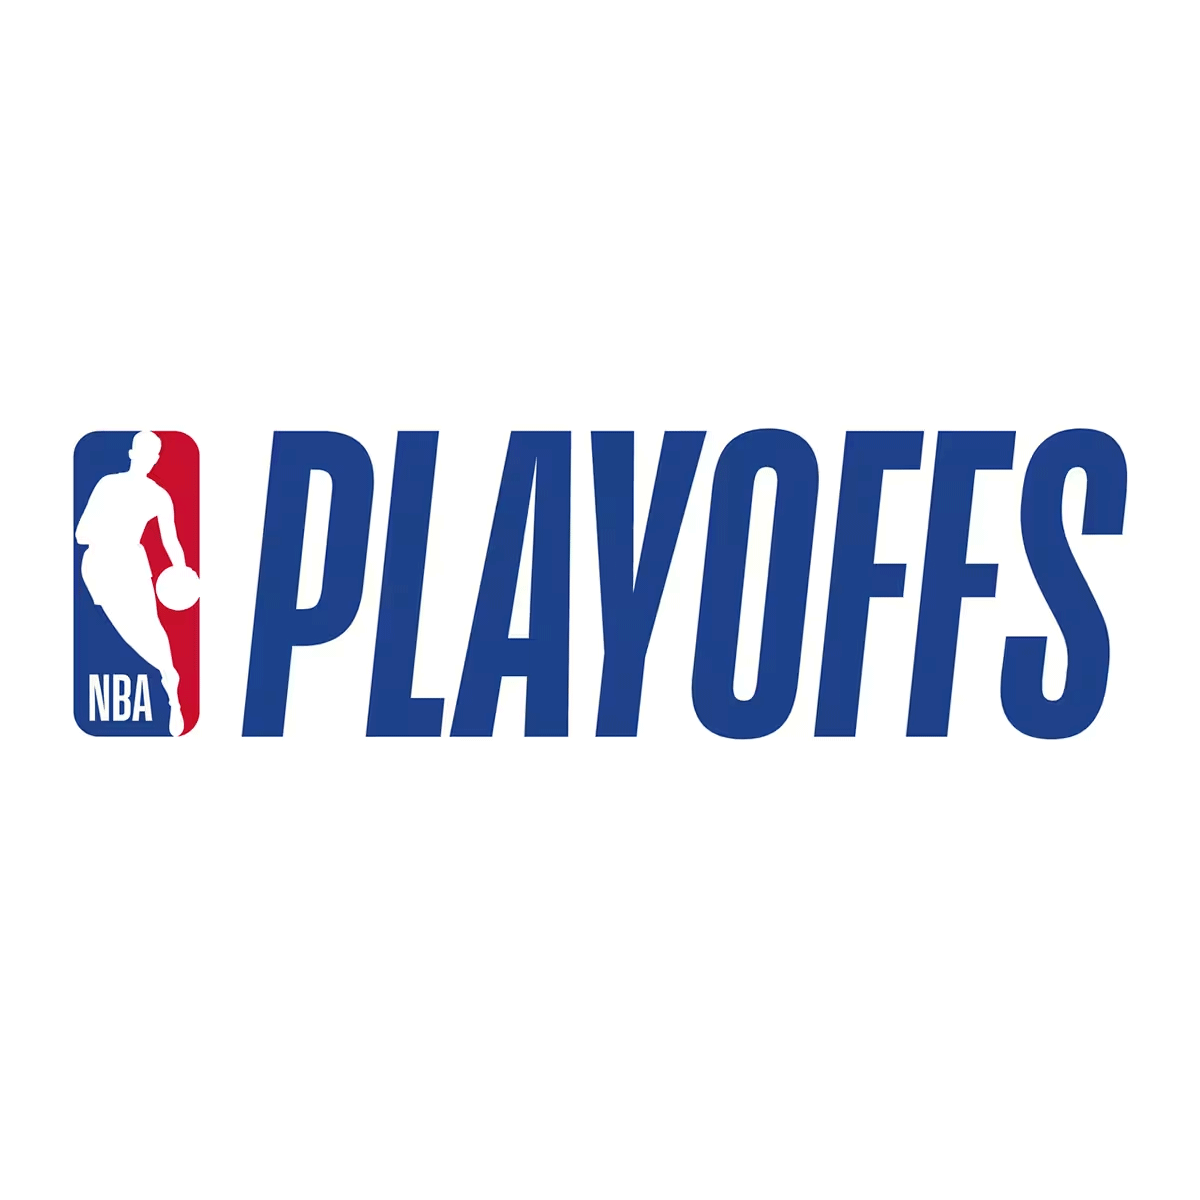 NBA Playoffs logo PNG